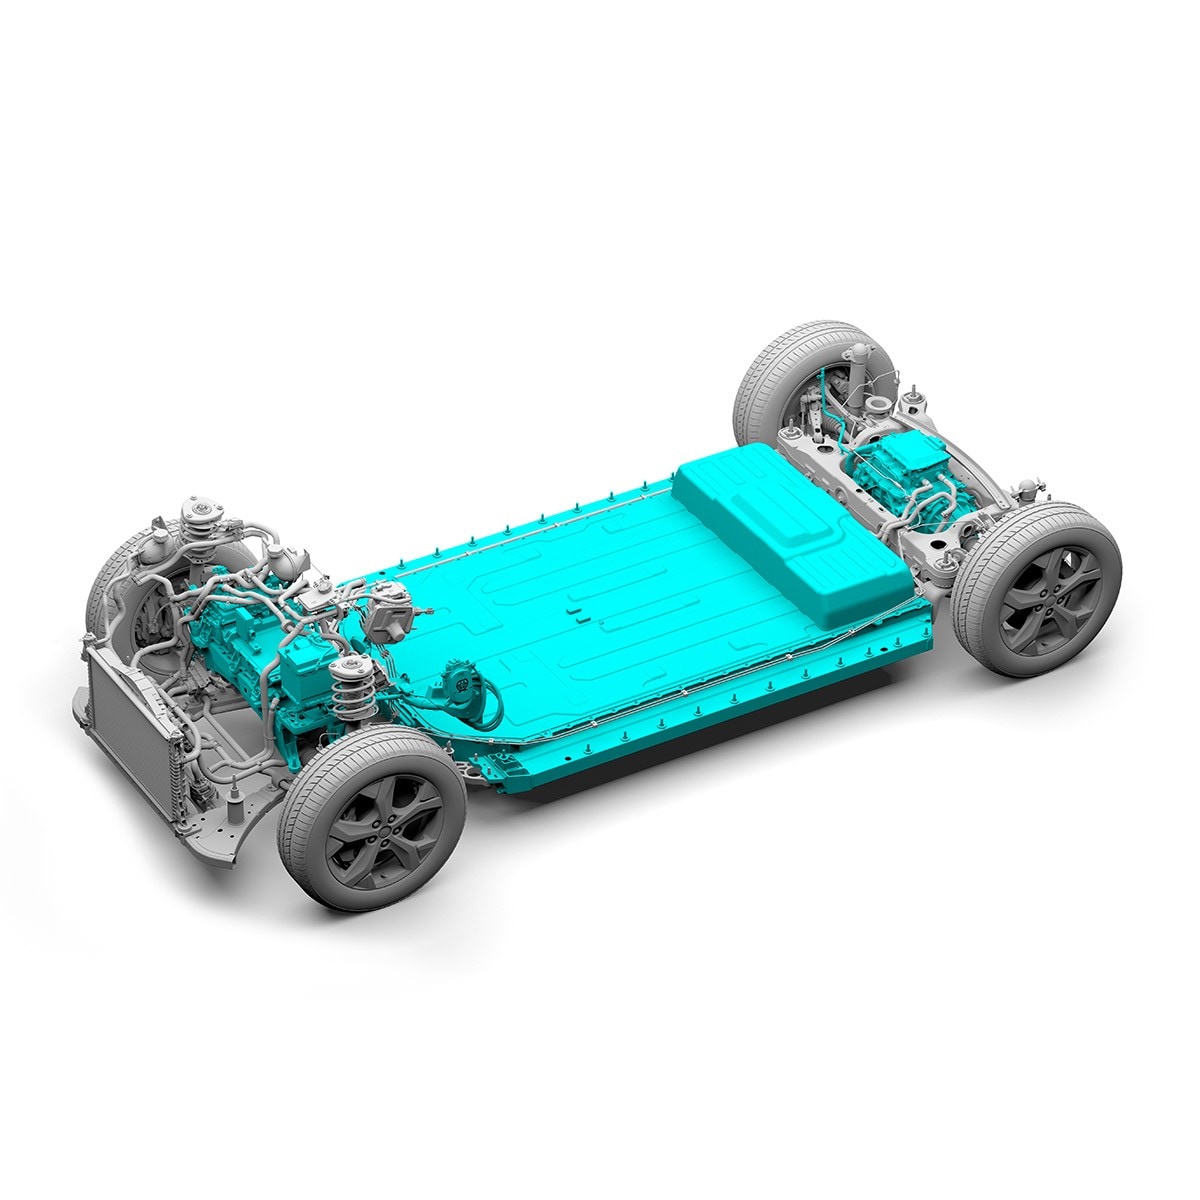 Ford Mustang Mach-E. Visualisierung Fahrgestell mit Batterie im Unterboden